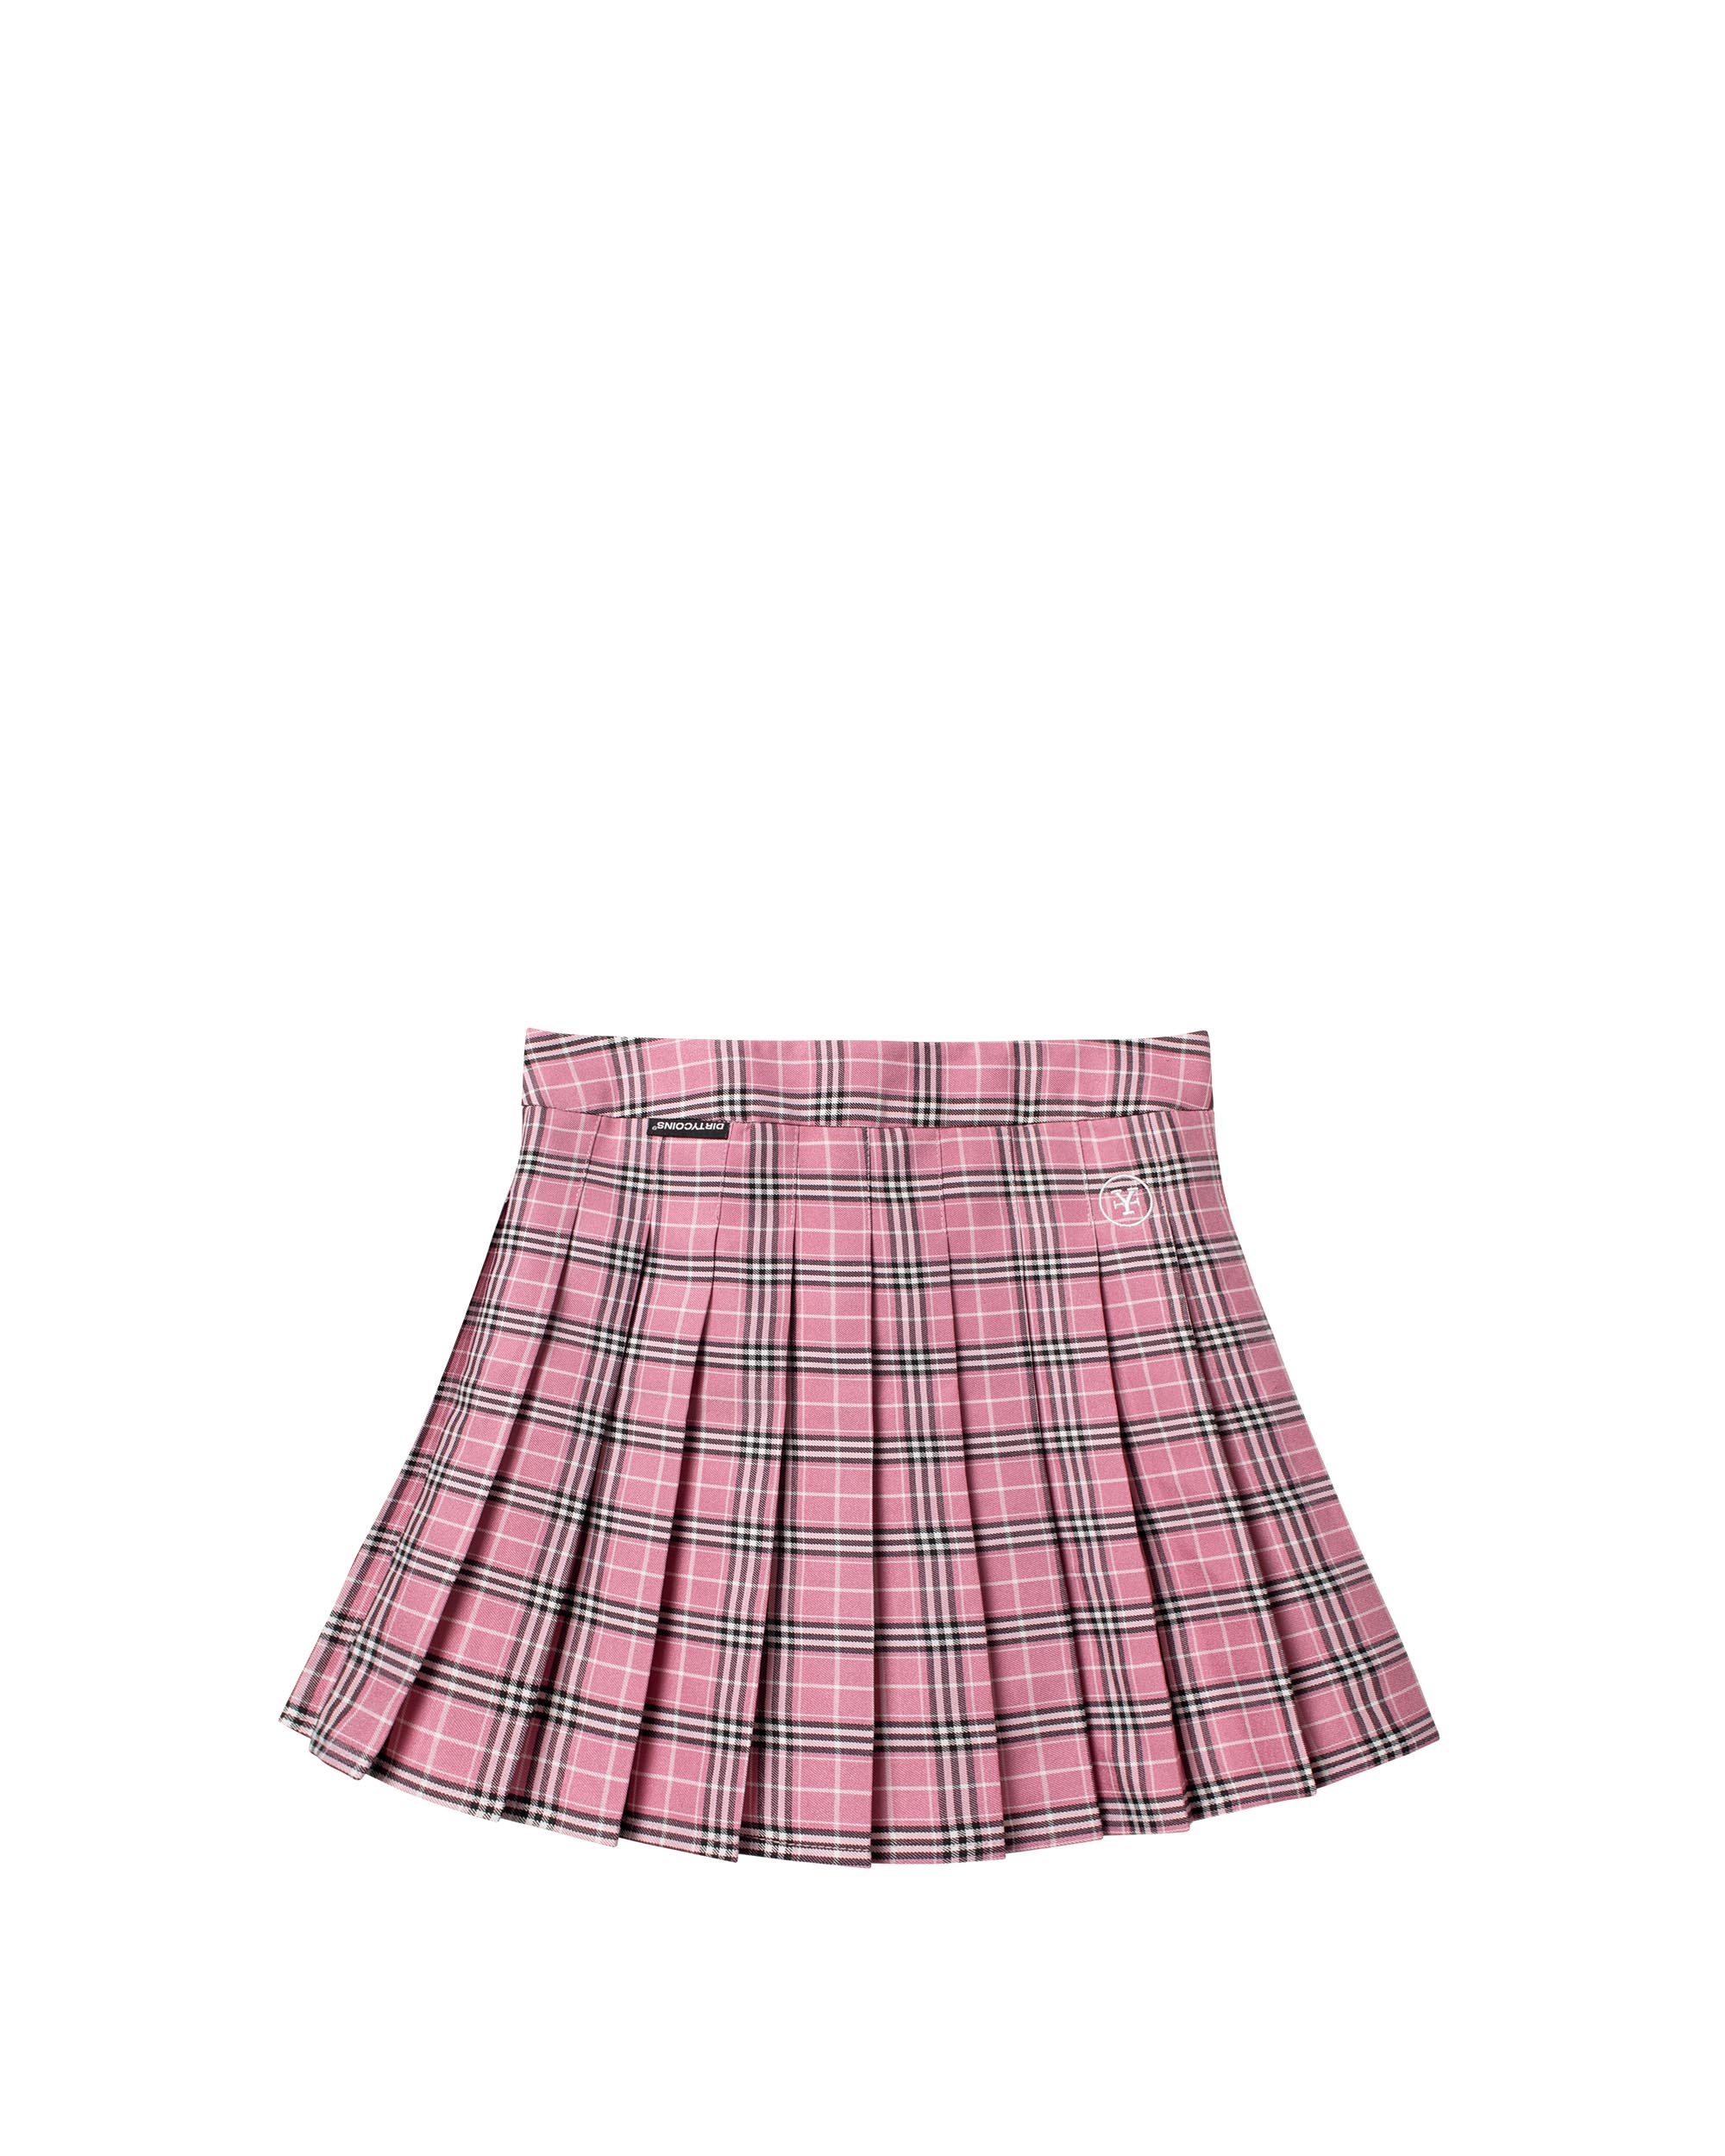 DirtyCoins Plaid Mini Skirt